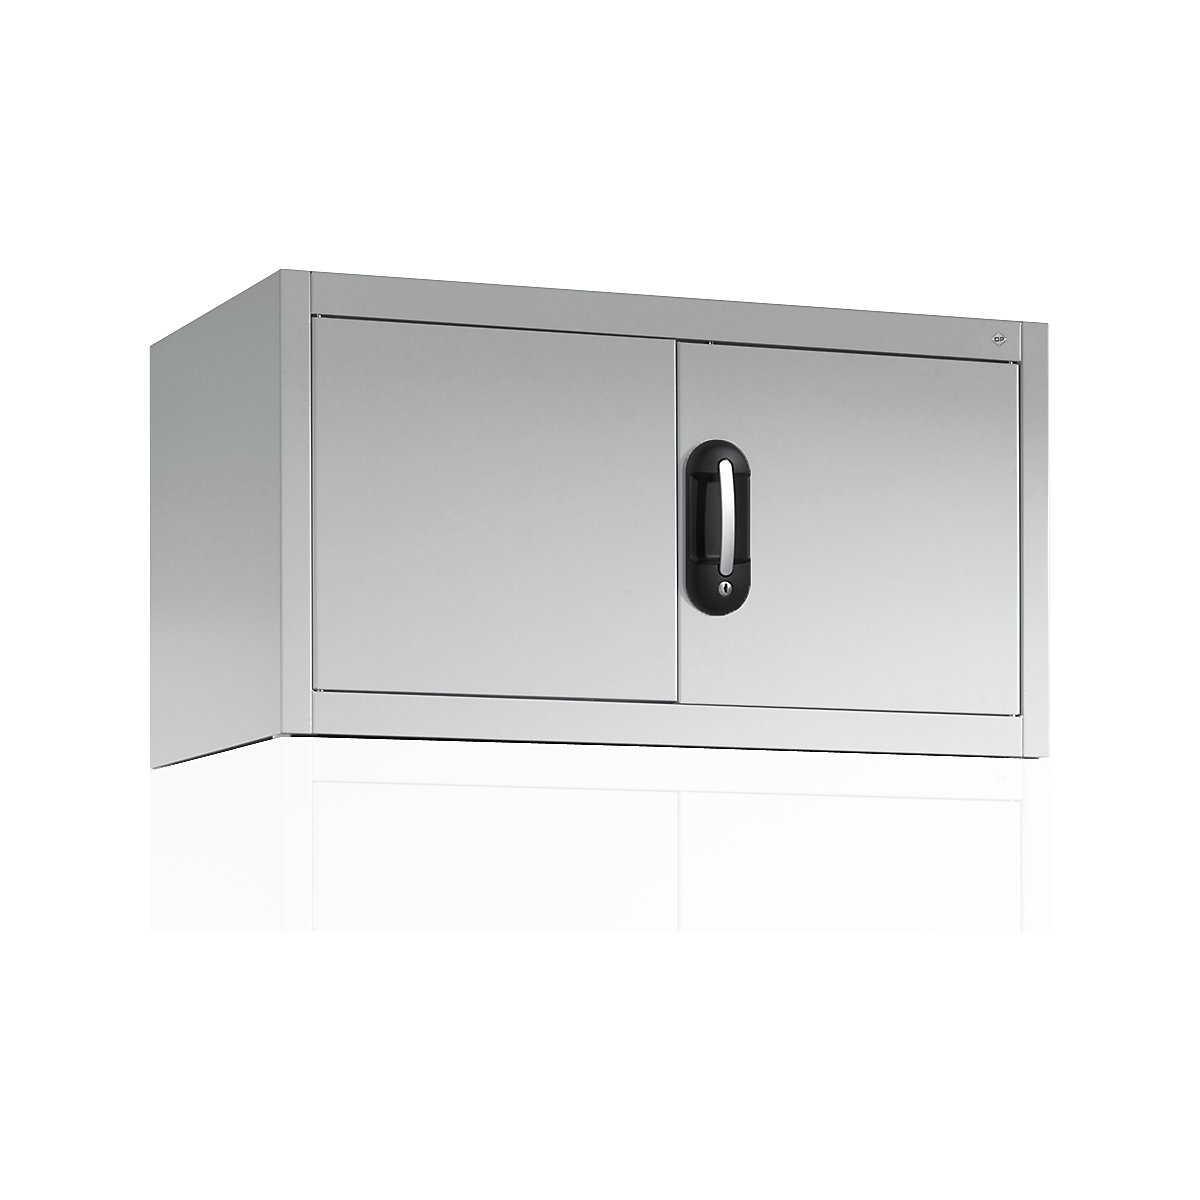 ACURADO add-on cupboard with hinged doors – C+P